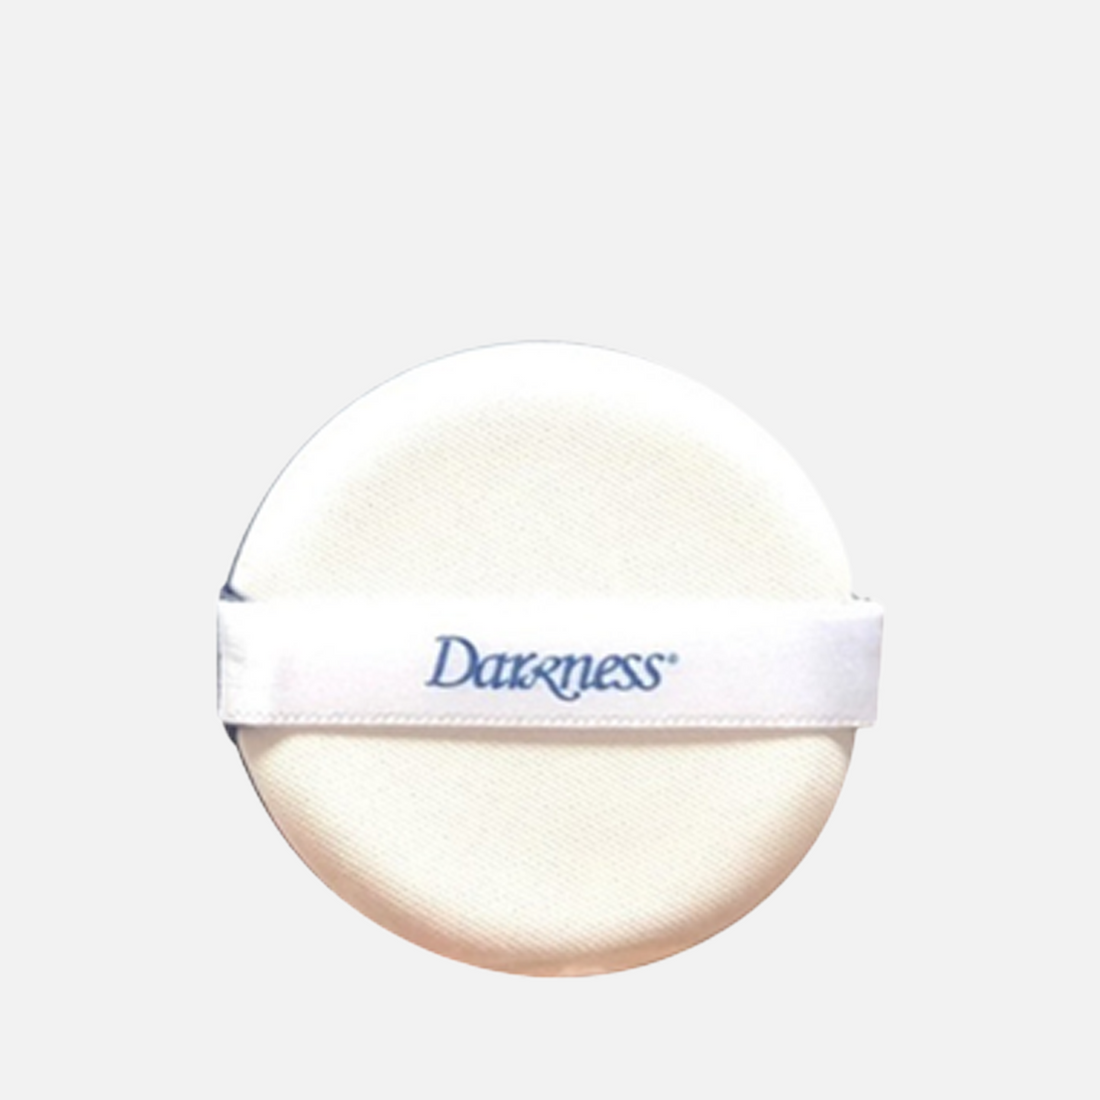 Darkness-化妆气垫粉扑-1个